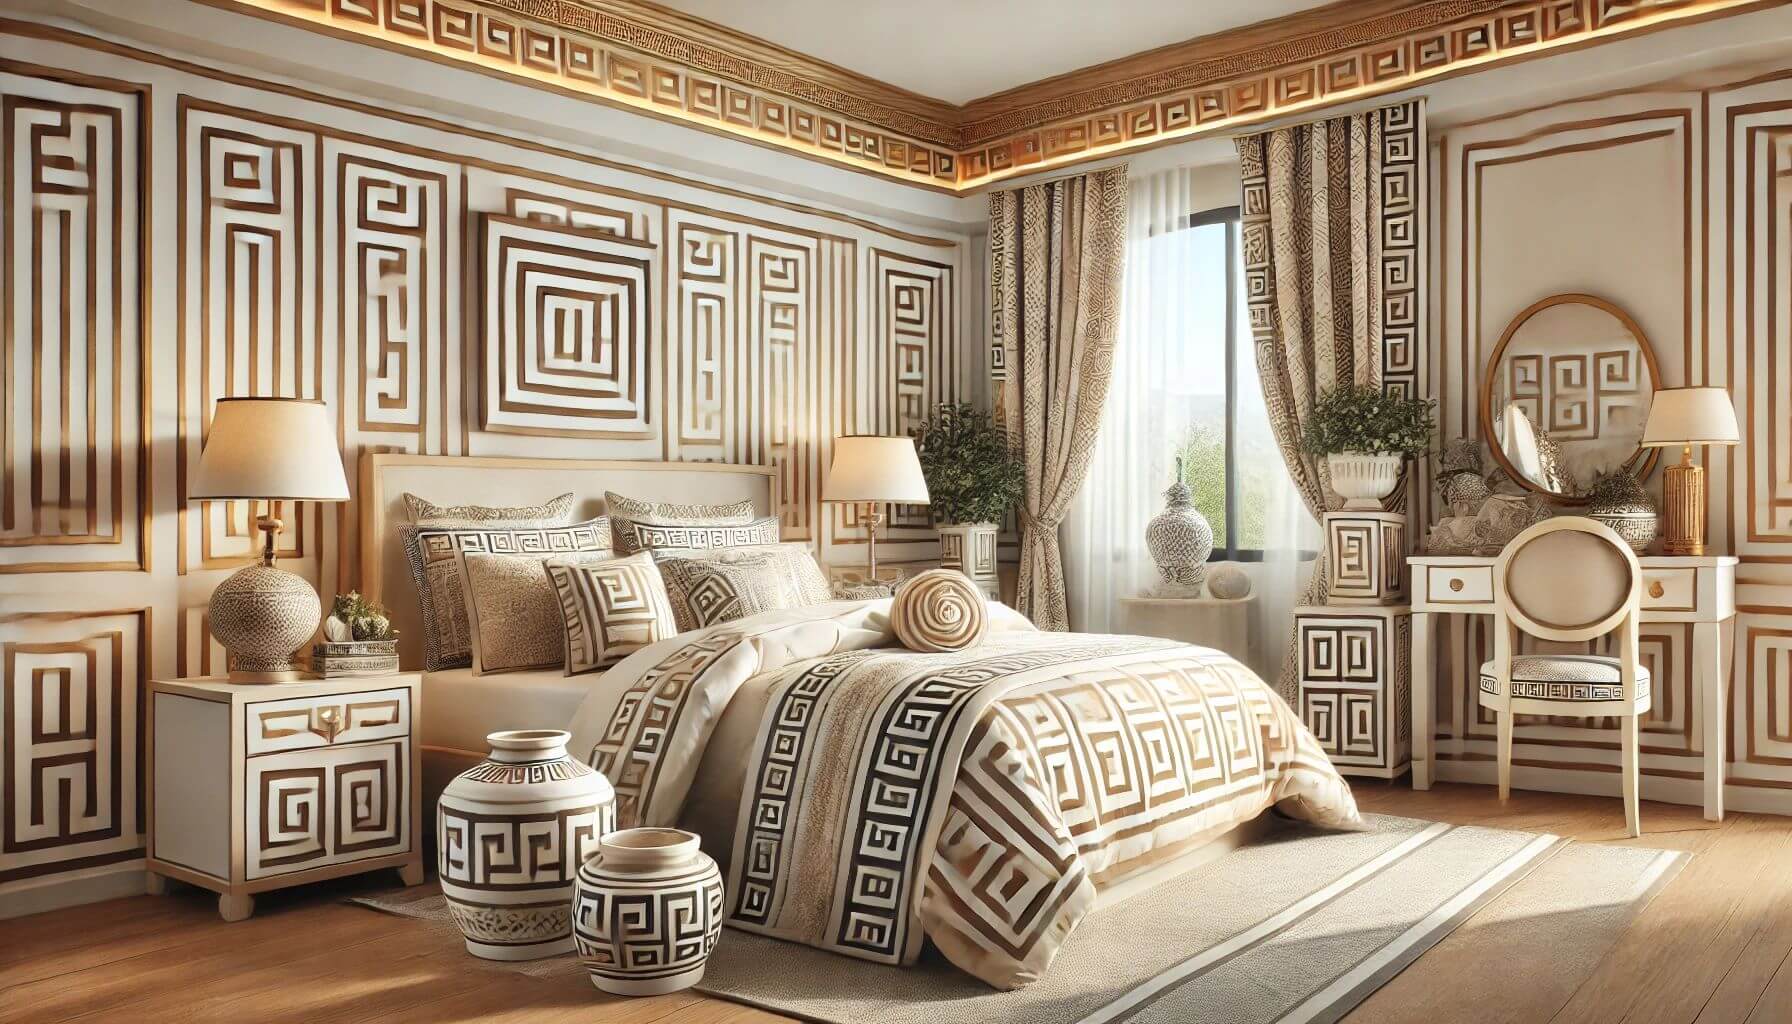 15 Greek Key Pattern Design Ideas for Your Bedroom